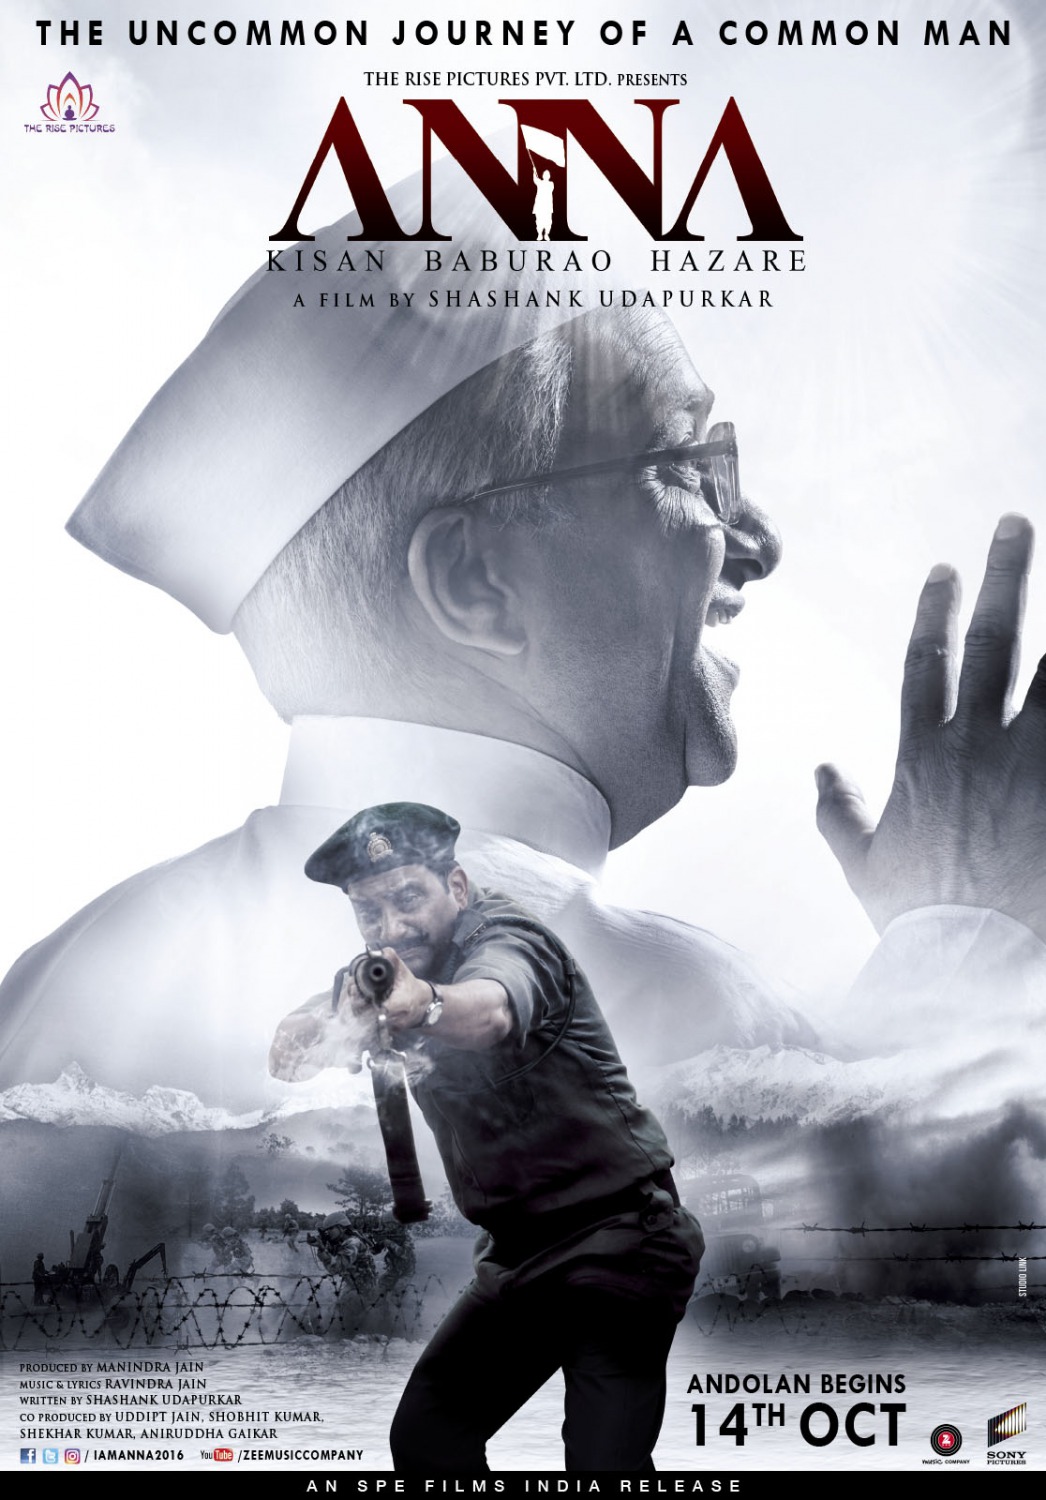 Extra Large Movie Poster Image for Anna, Kisan Baburao Hazare (#1 of 2)